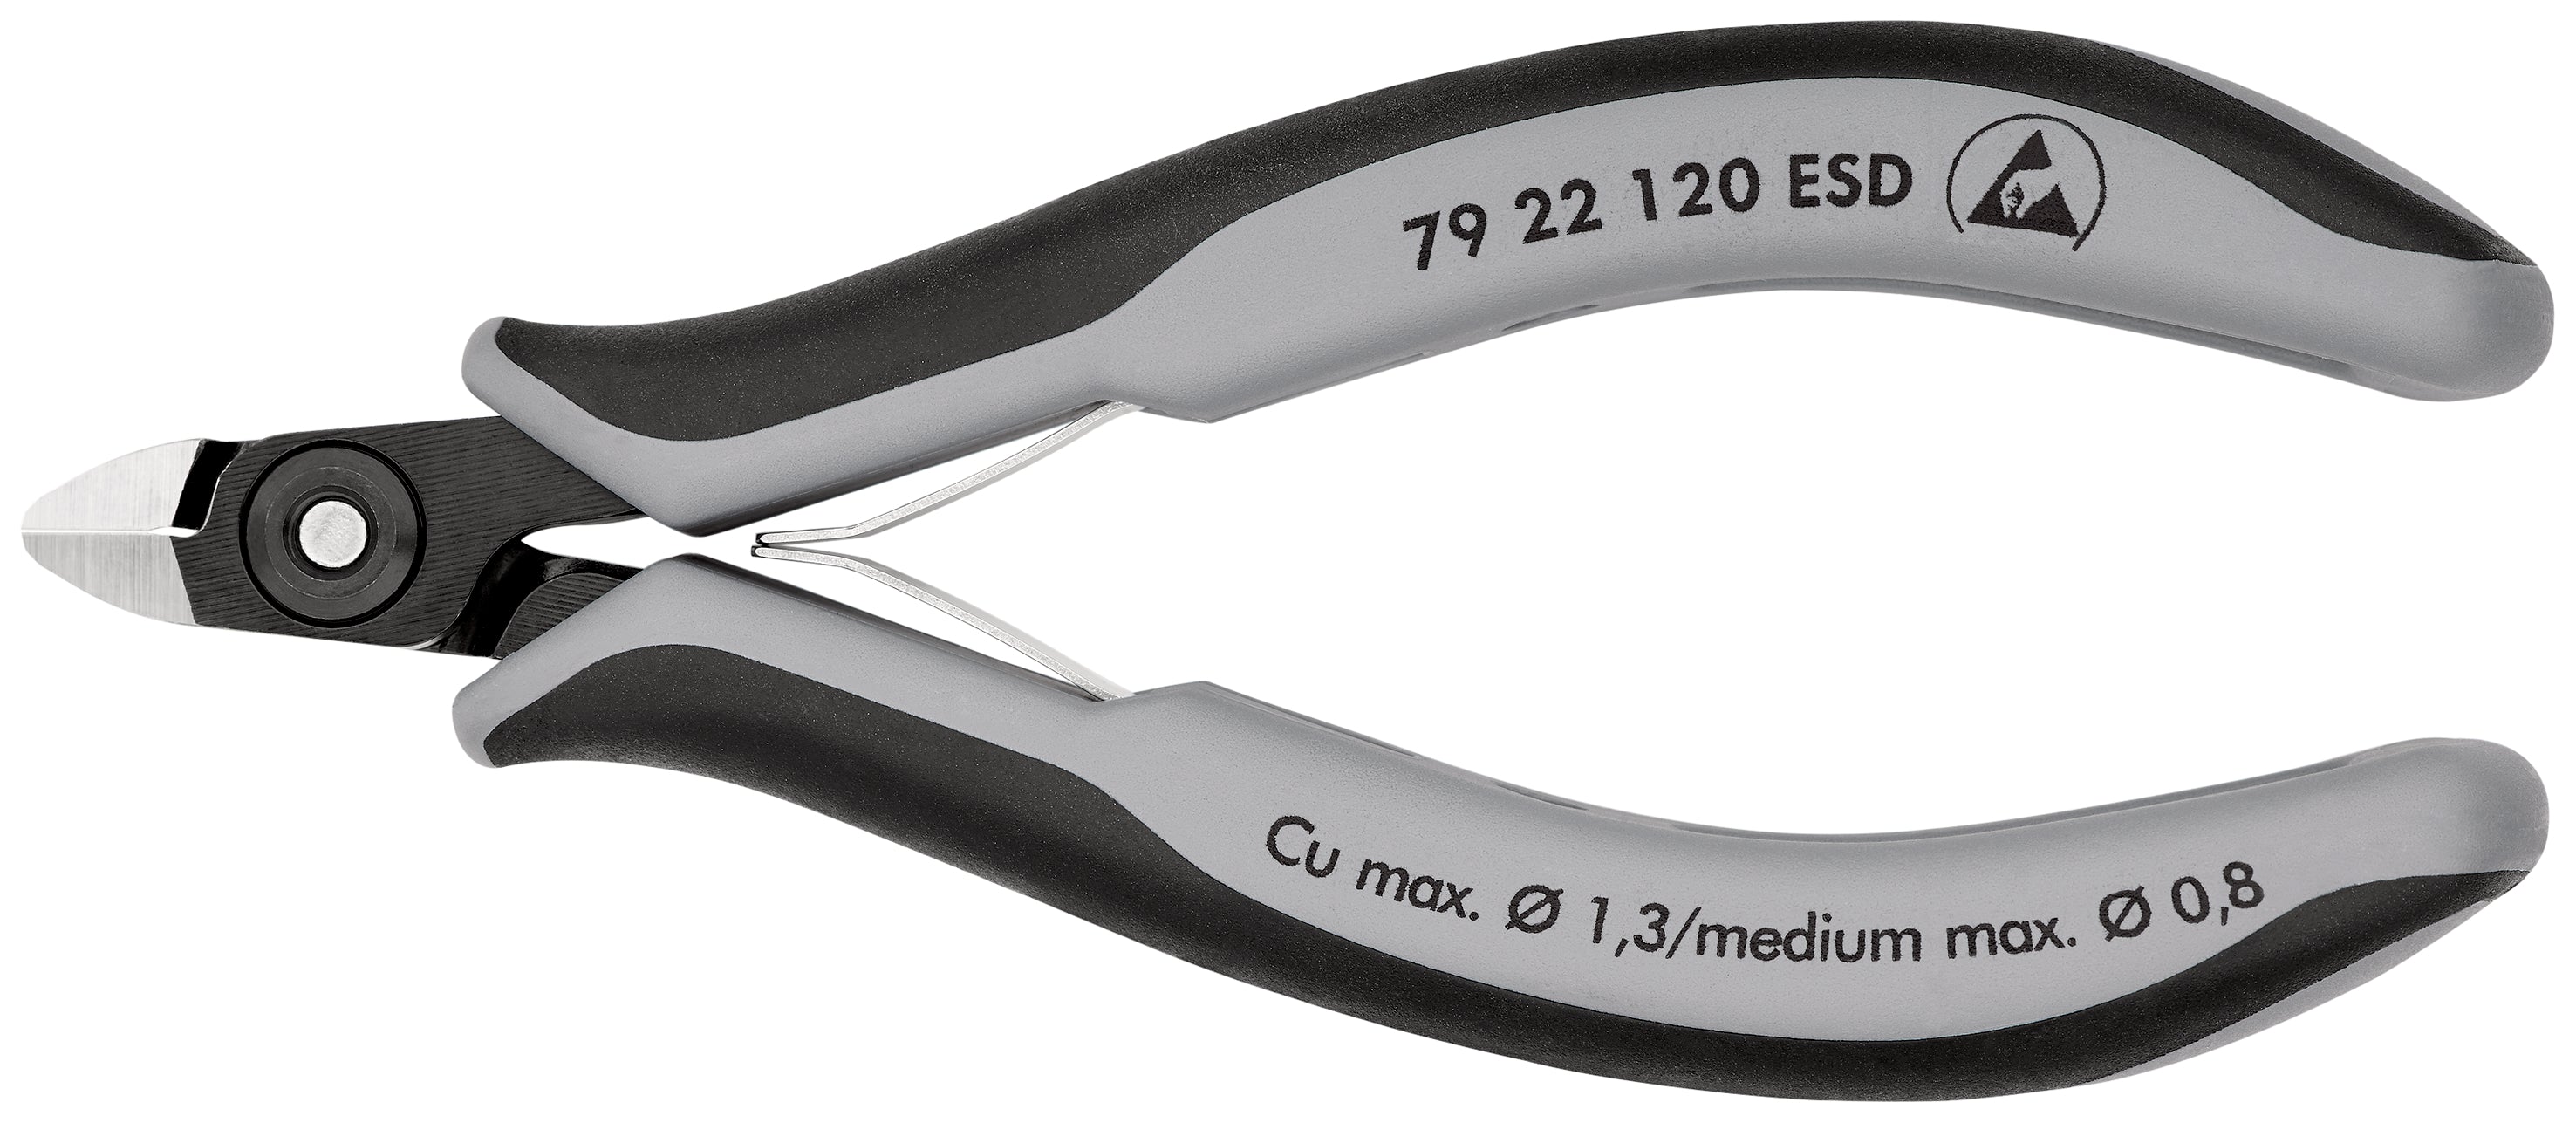 KNIPEX 79 22 120 ESD Pinzas de precisión de corte diagonal para electrónica ESD 120 mm